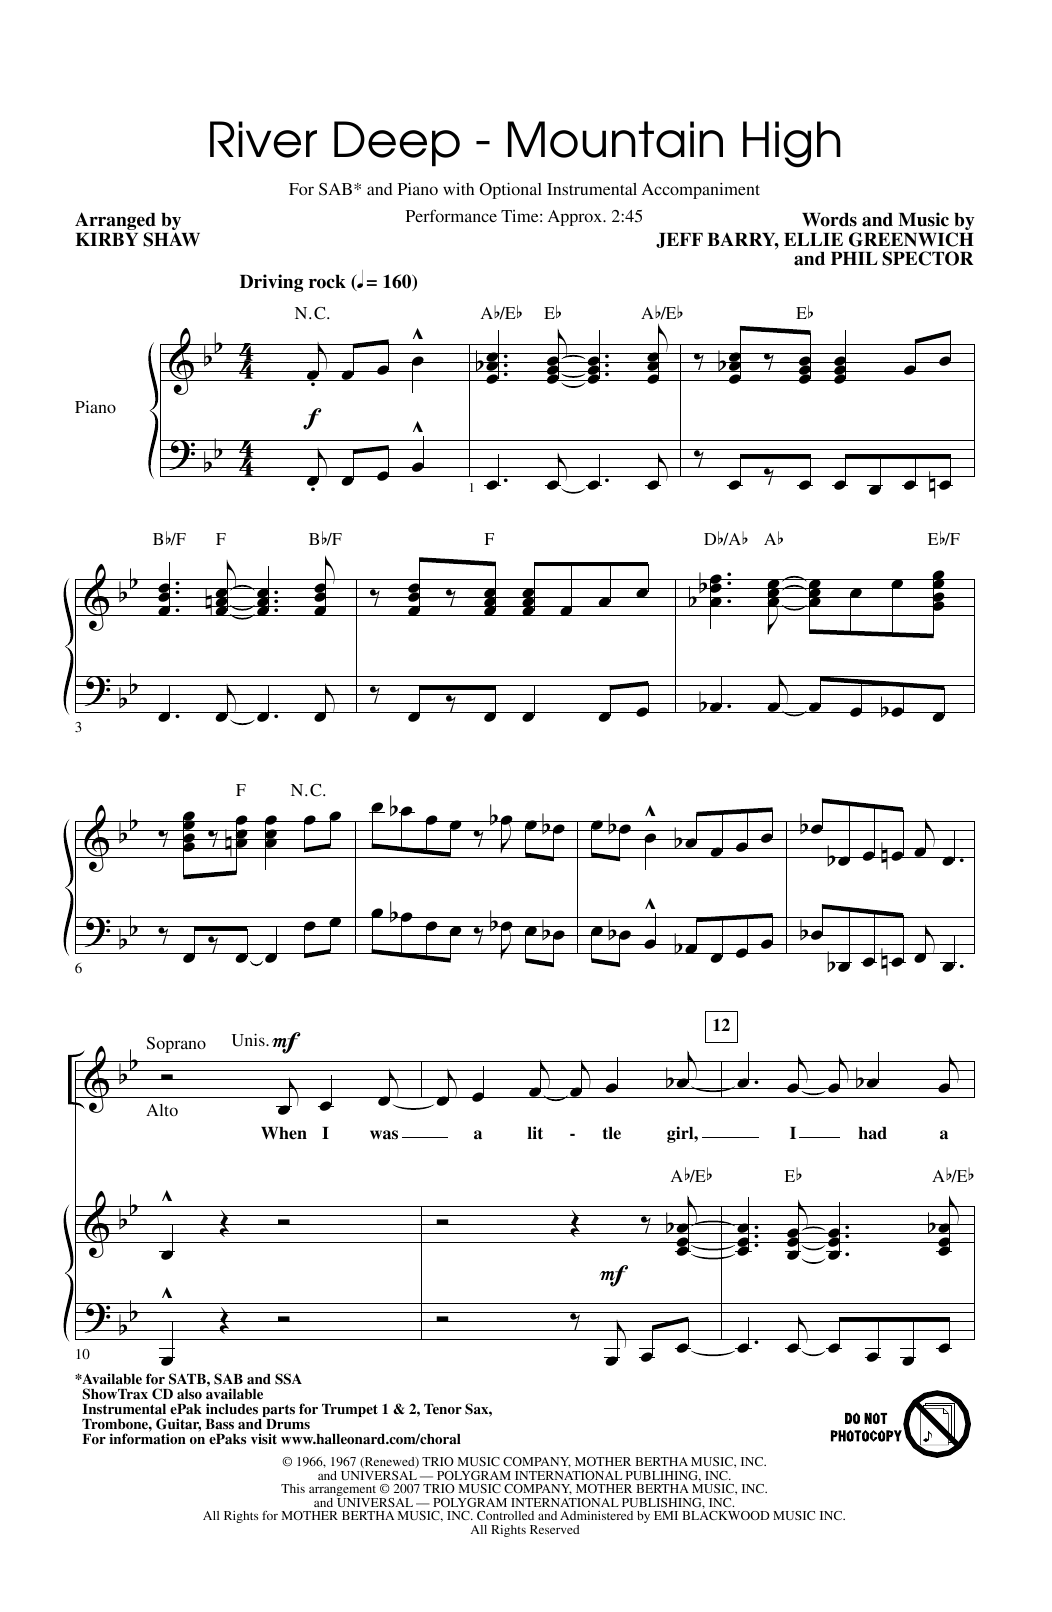 Tina Turner River Deep - Mountain High (arr. Kirby Shaw) sheet music notes and chords arranged for SAB Choir